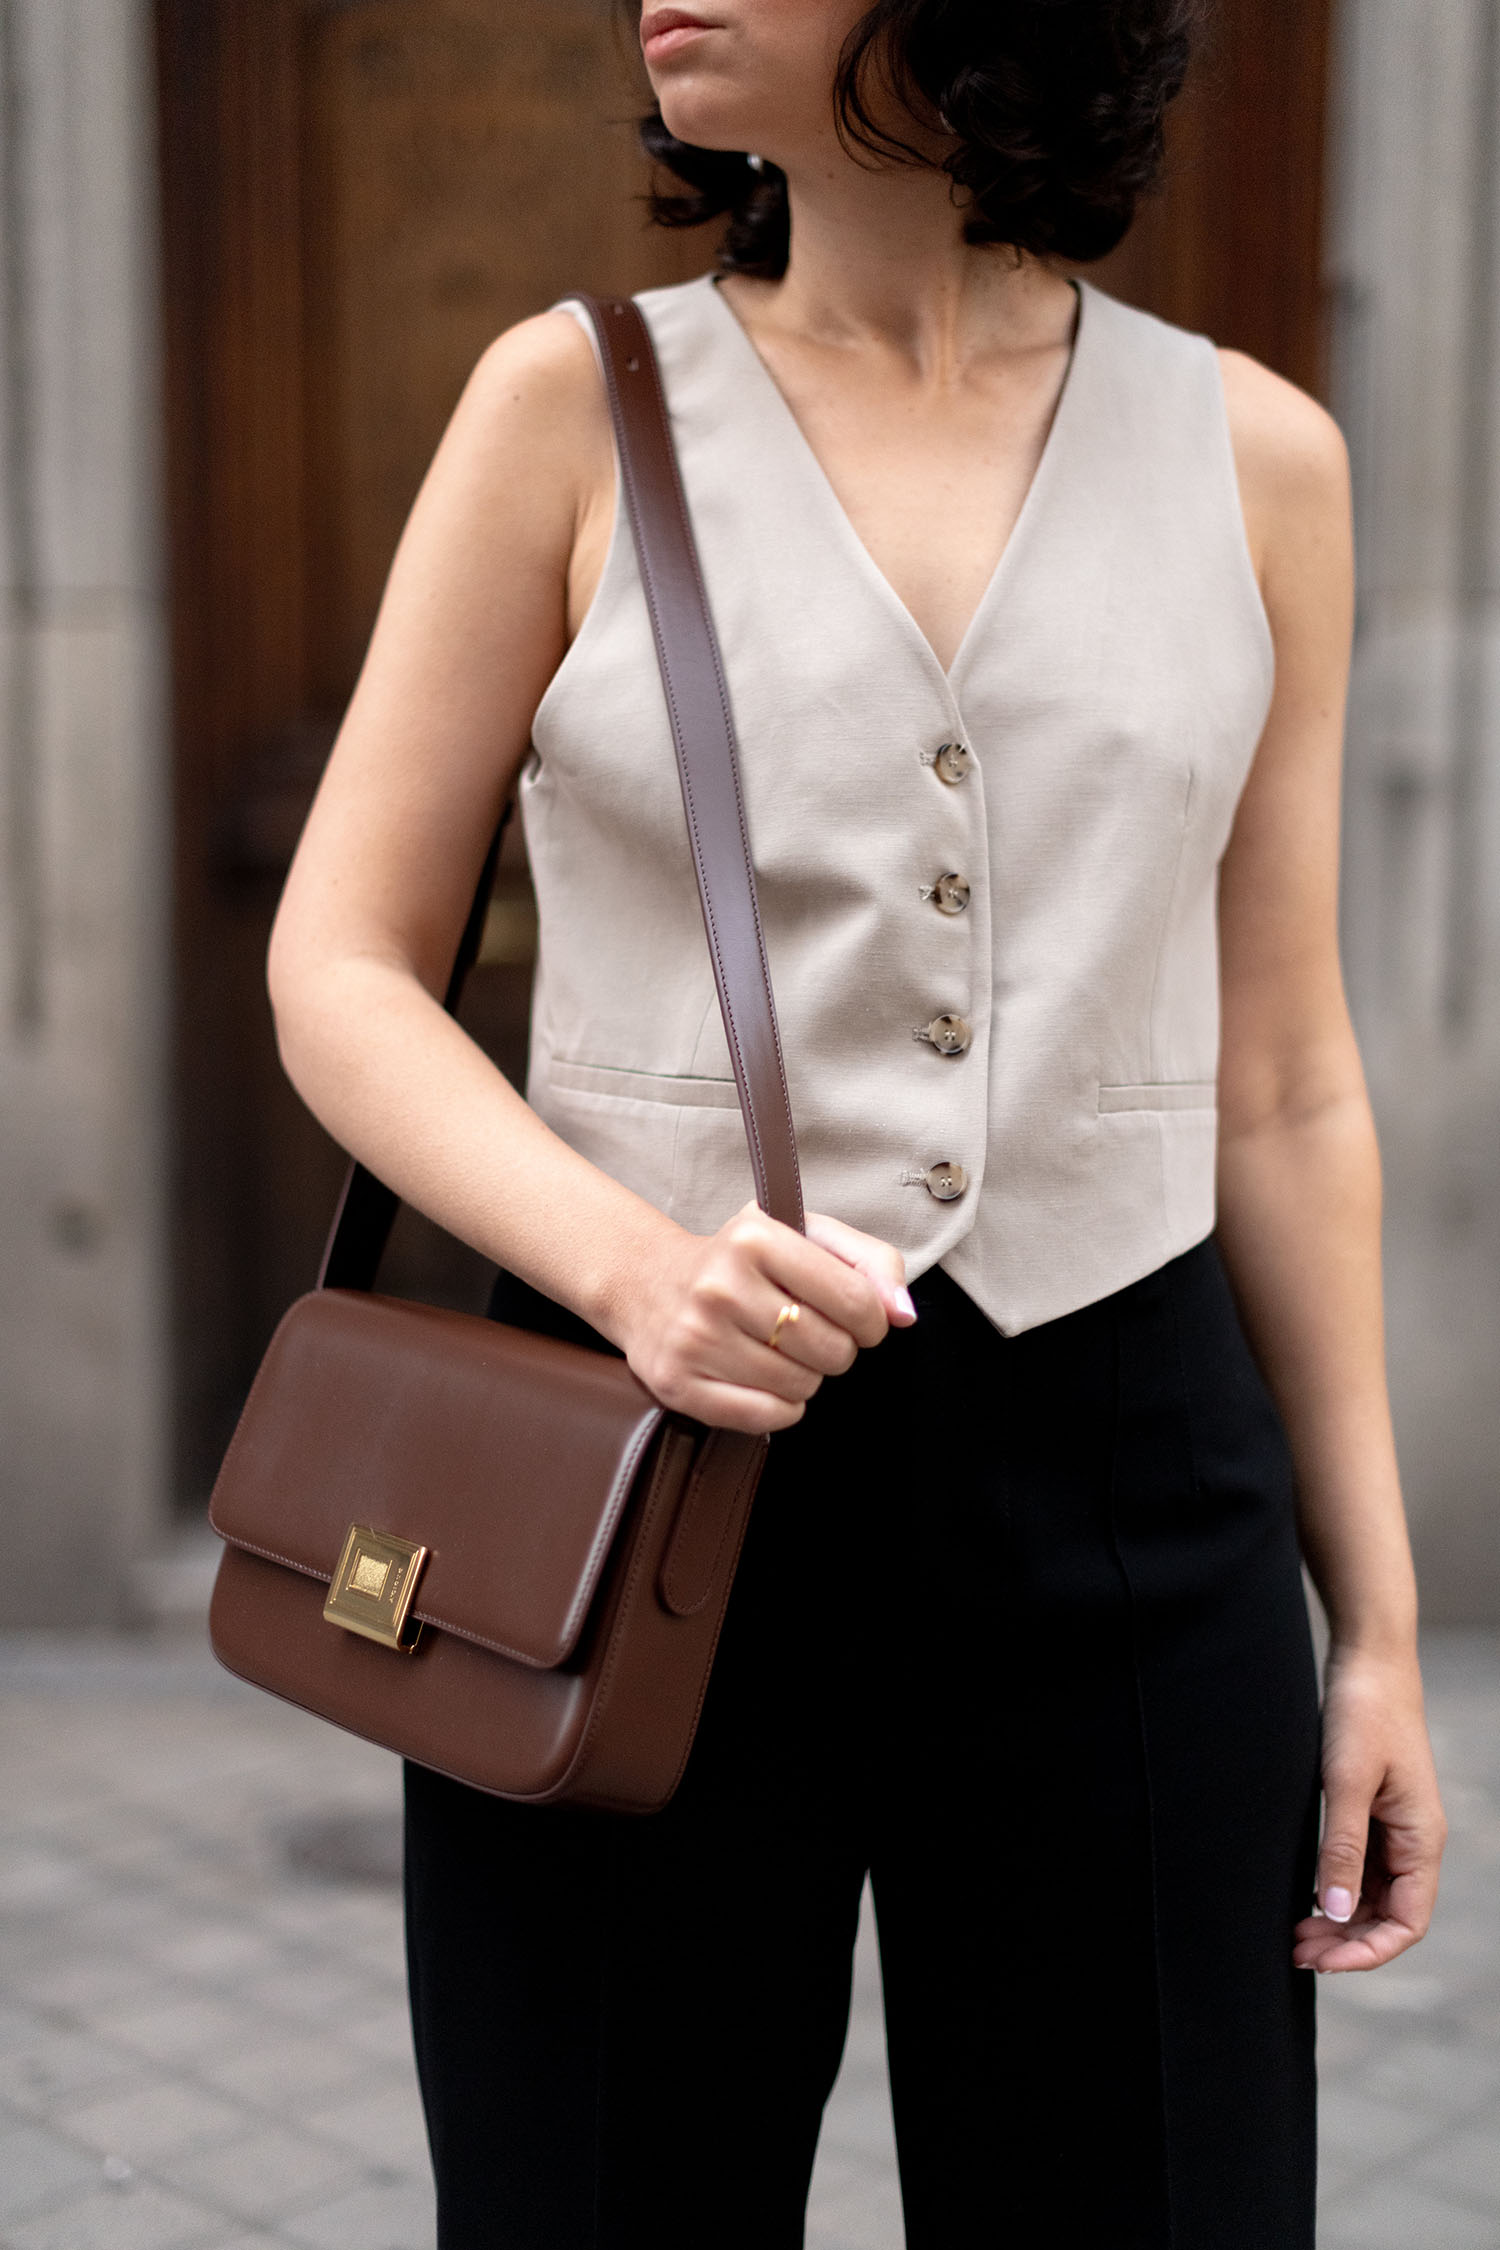 Coco & Voltaire - Zara vest, A. Cloud Official book bag, Zara trousers